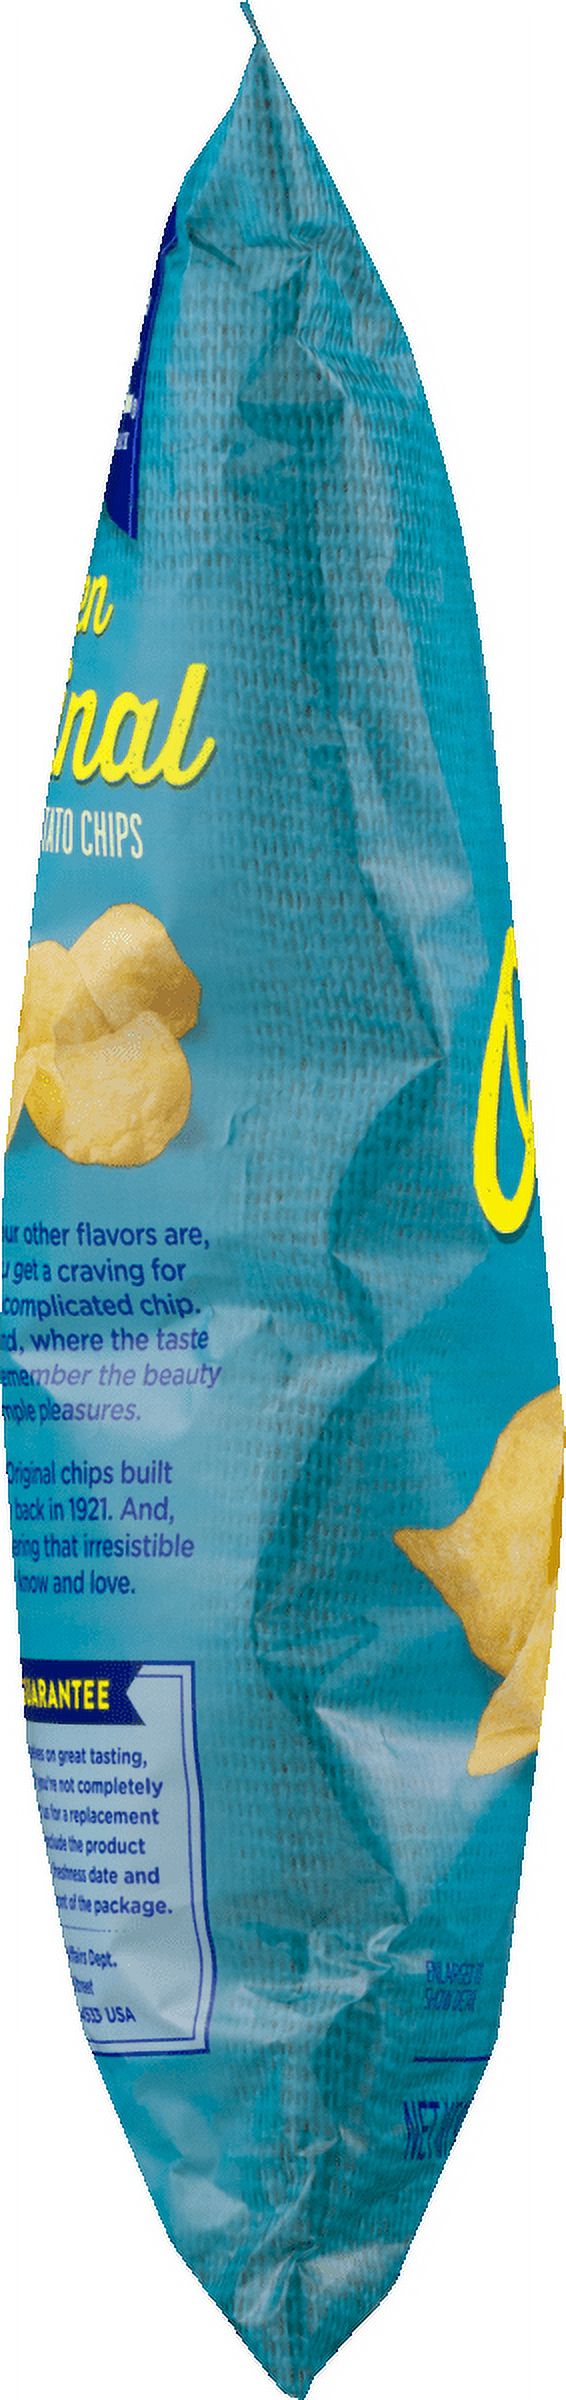 Wise Foods Golden Original Potato Chips, 3-Pack 7.5 oz. Bags - image 3 of 3